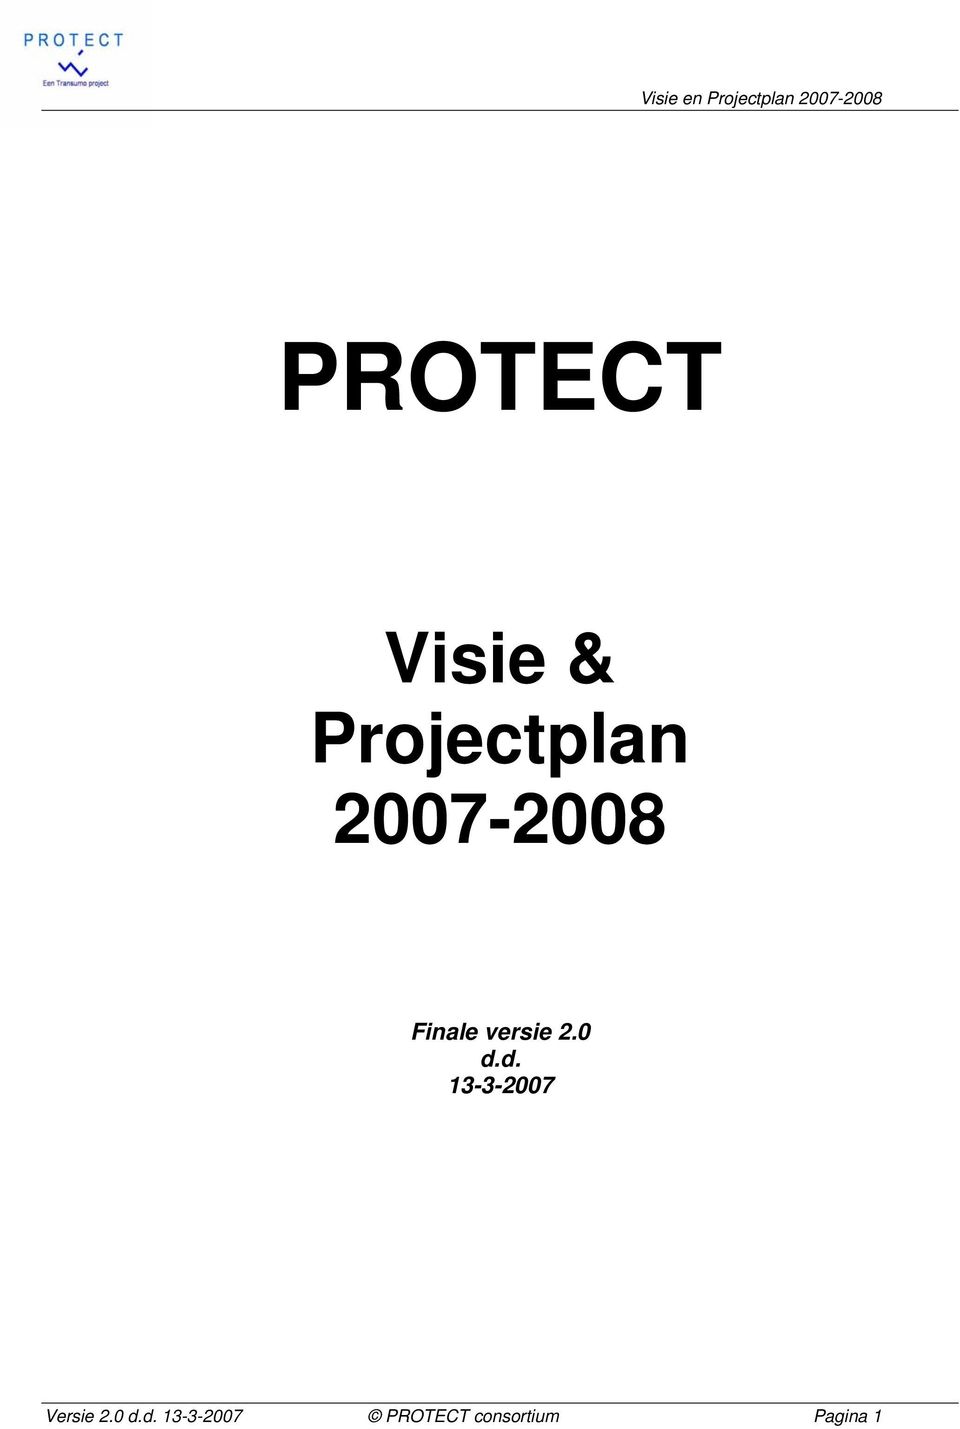 d. 13-3-2007 Versie 2.0 d.d.